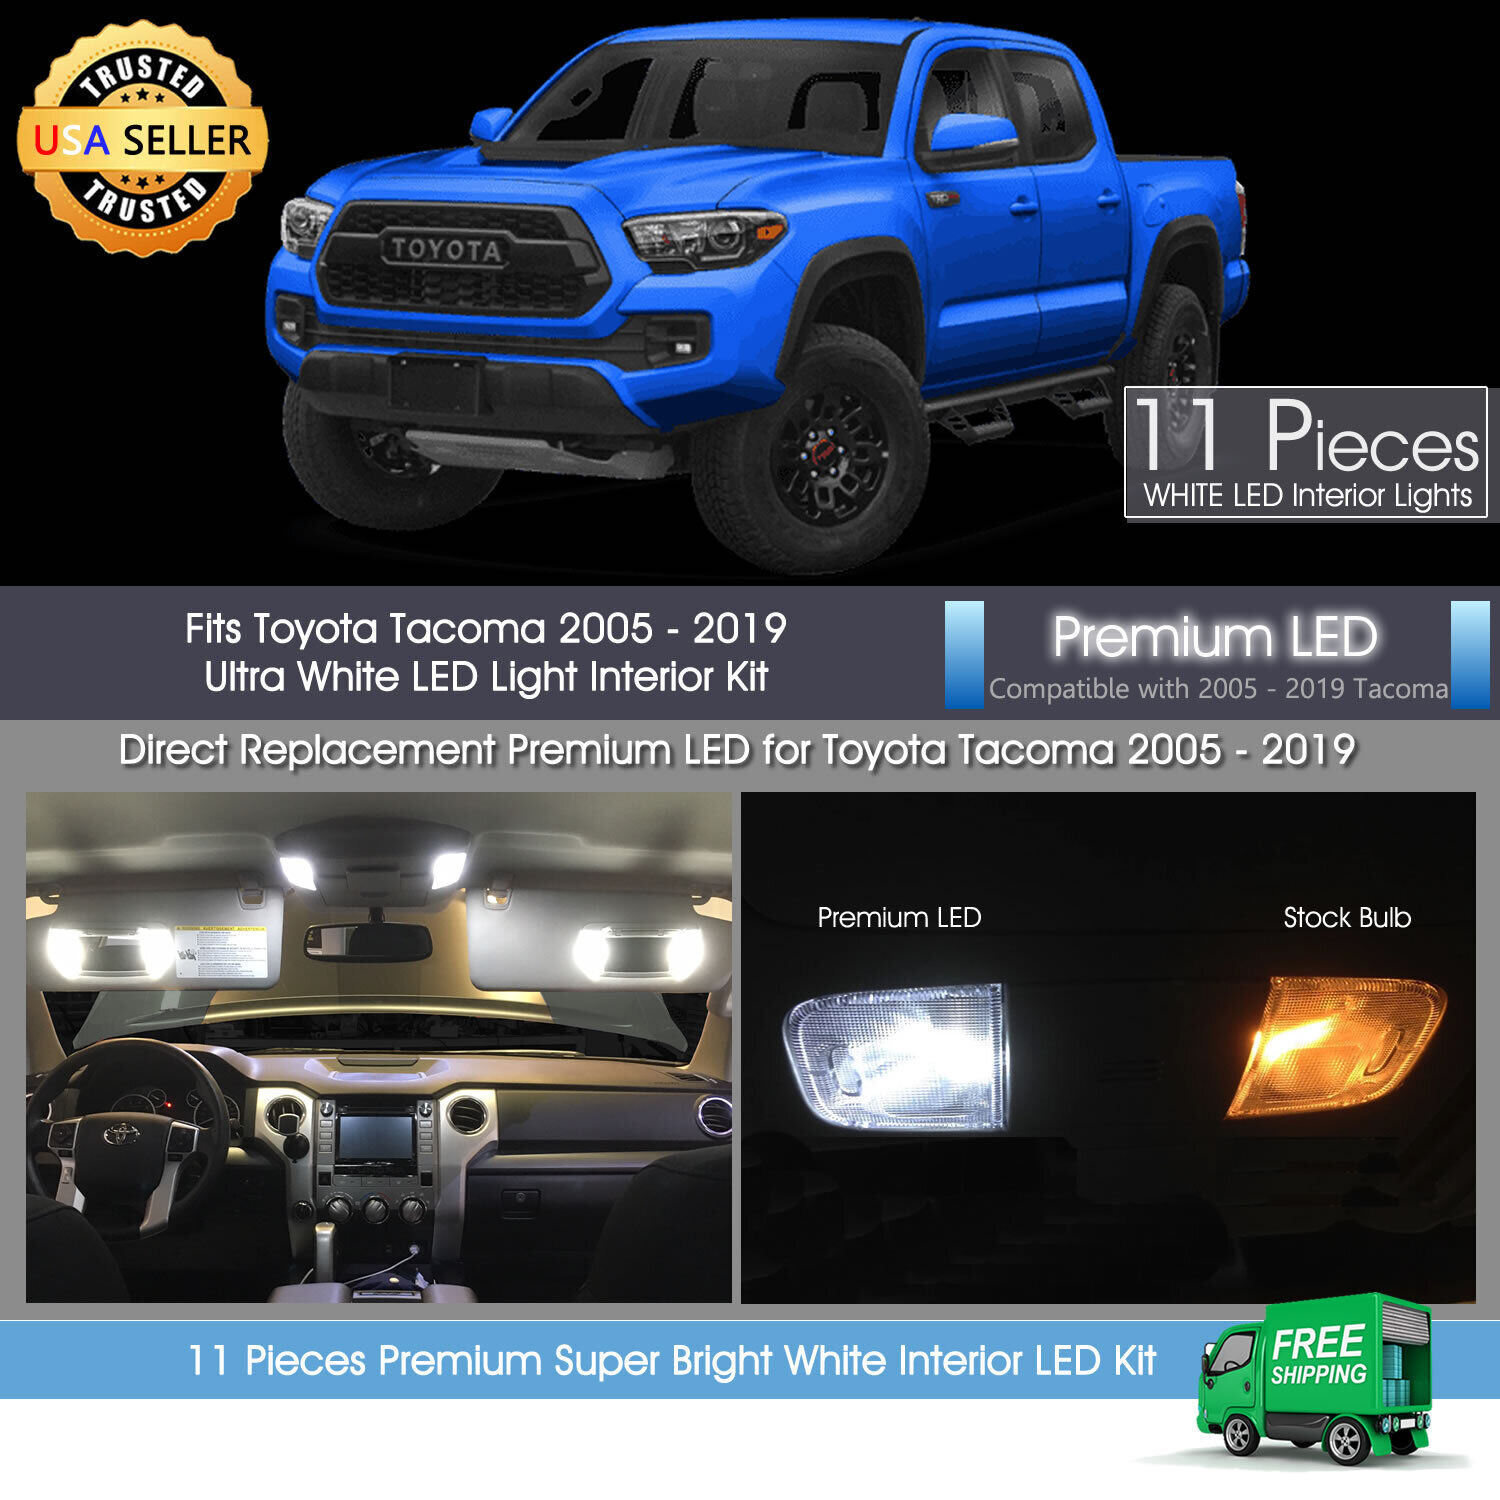 12 x White Interior LED Light Package For 2005 - 2019 Toyota Tacoma Premium Kit